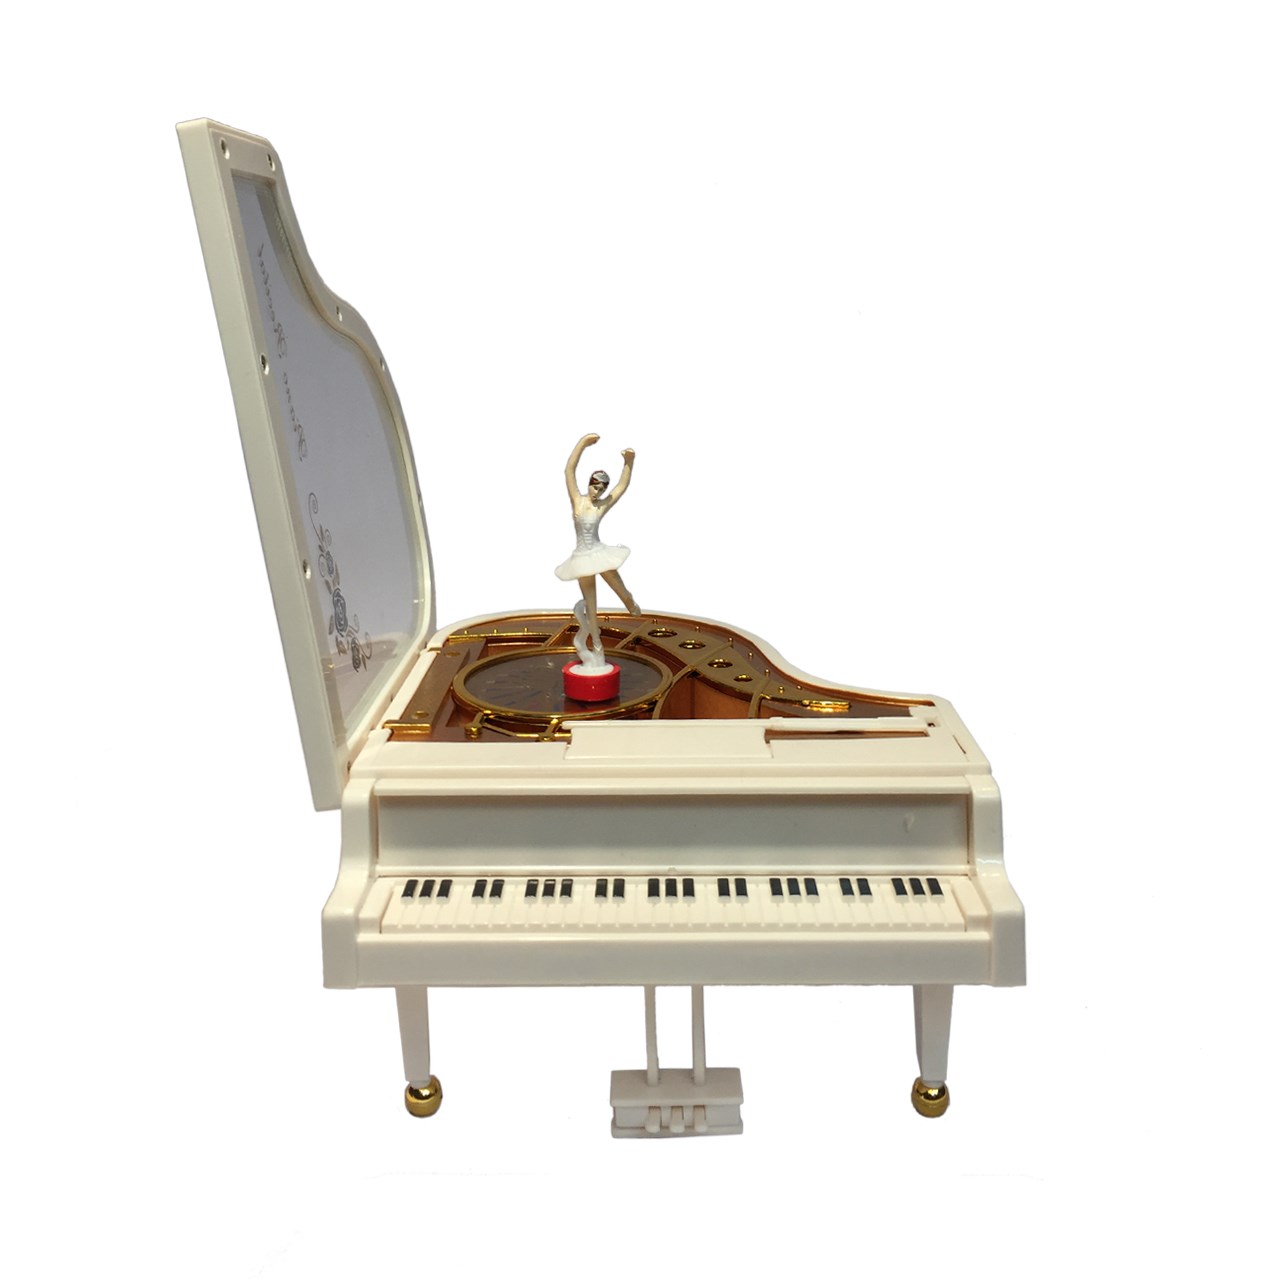 ماکت موزیکال گالری ره آورد طرح پیانو کد 1578